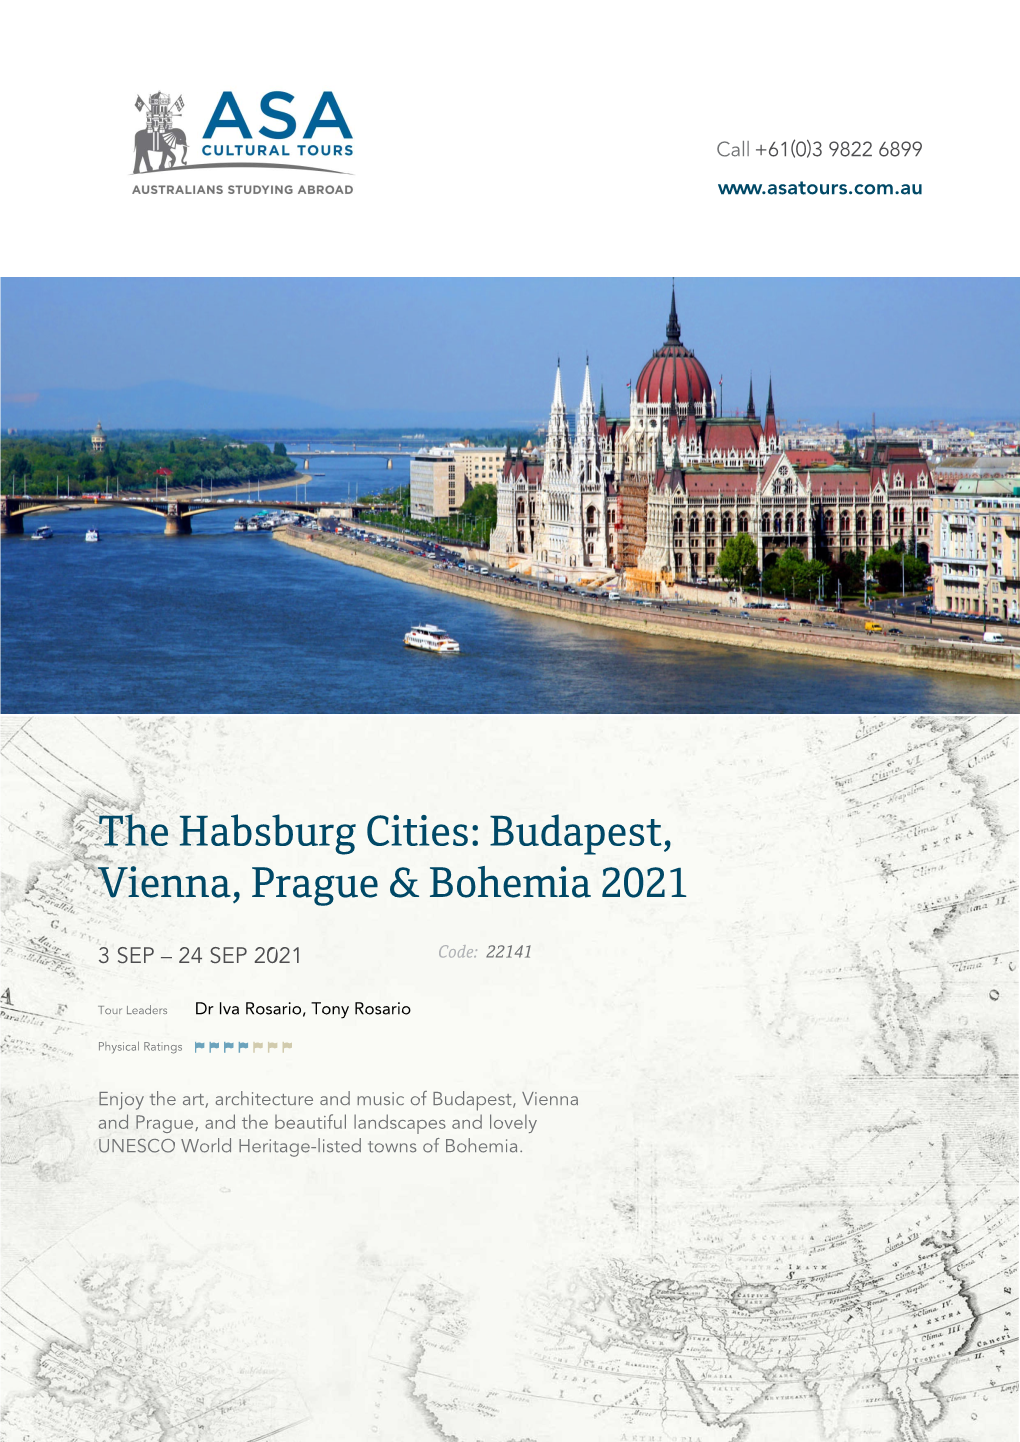 The Habsburg Cities: Budapest, Vienna, Prague & Bohemia 2021